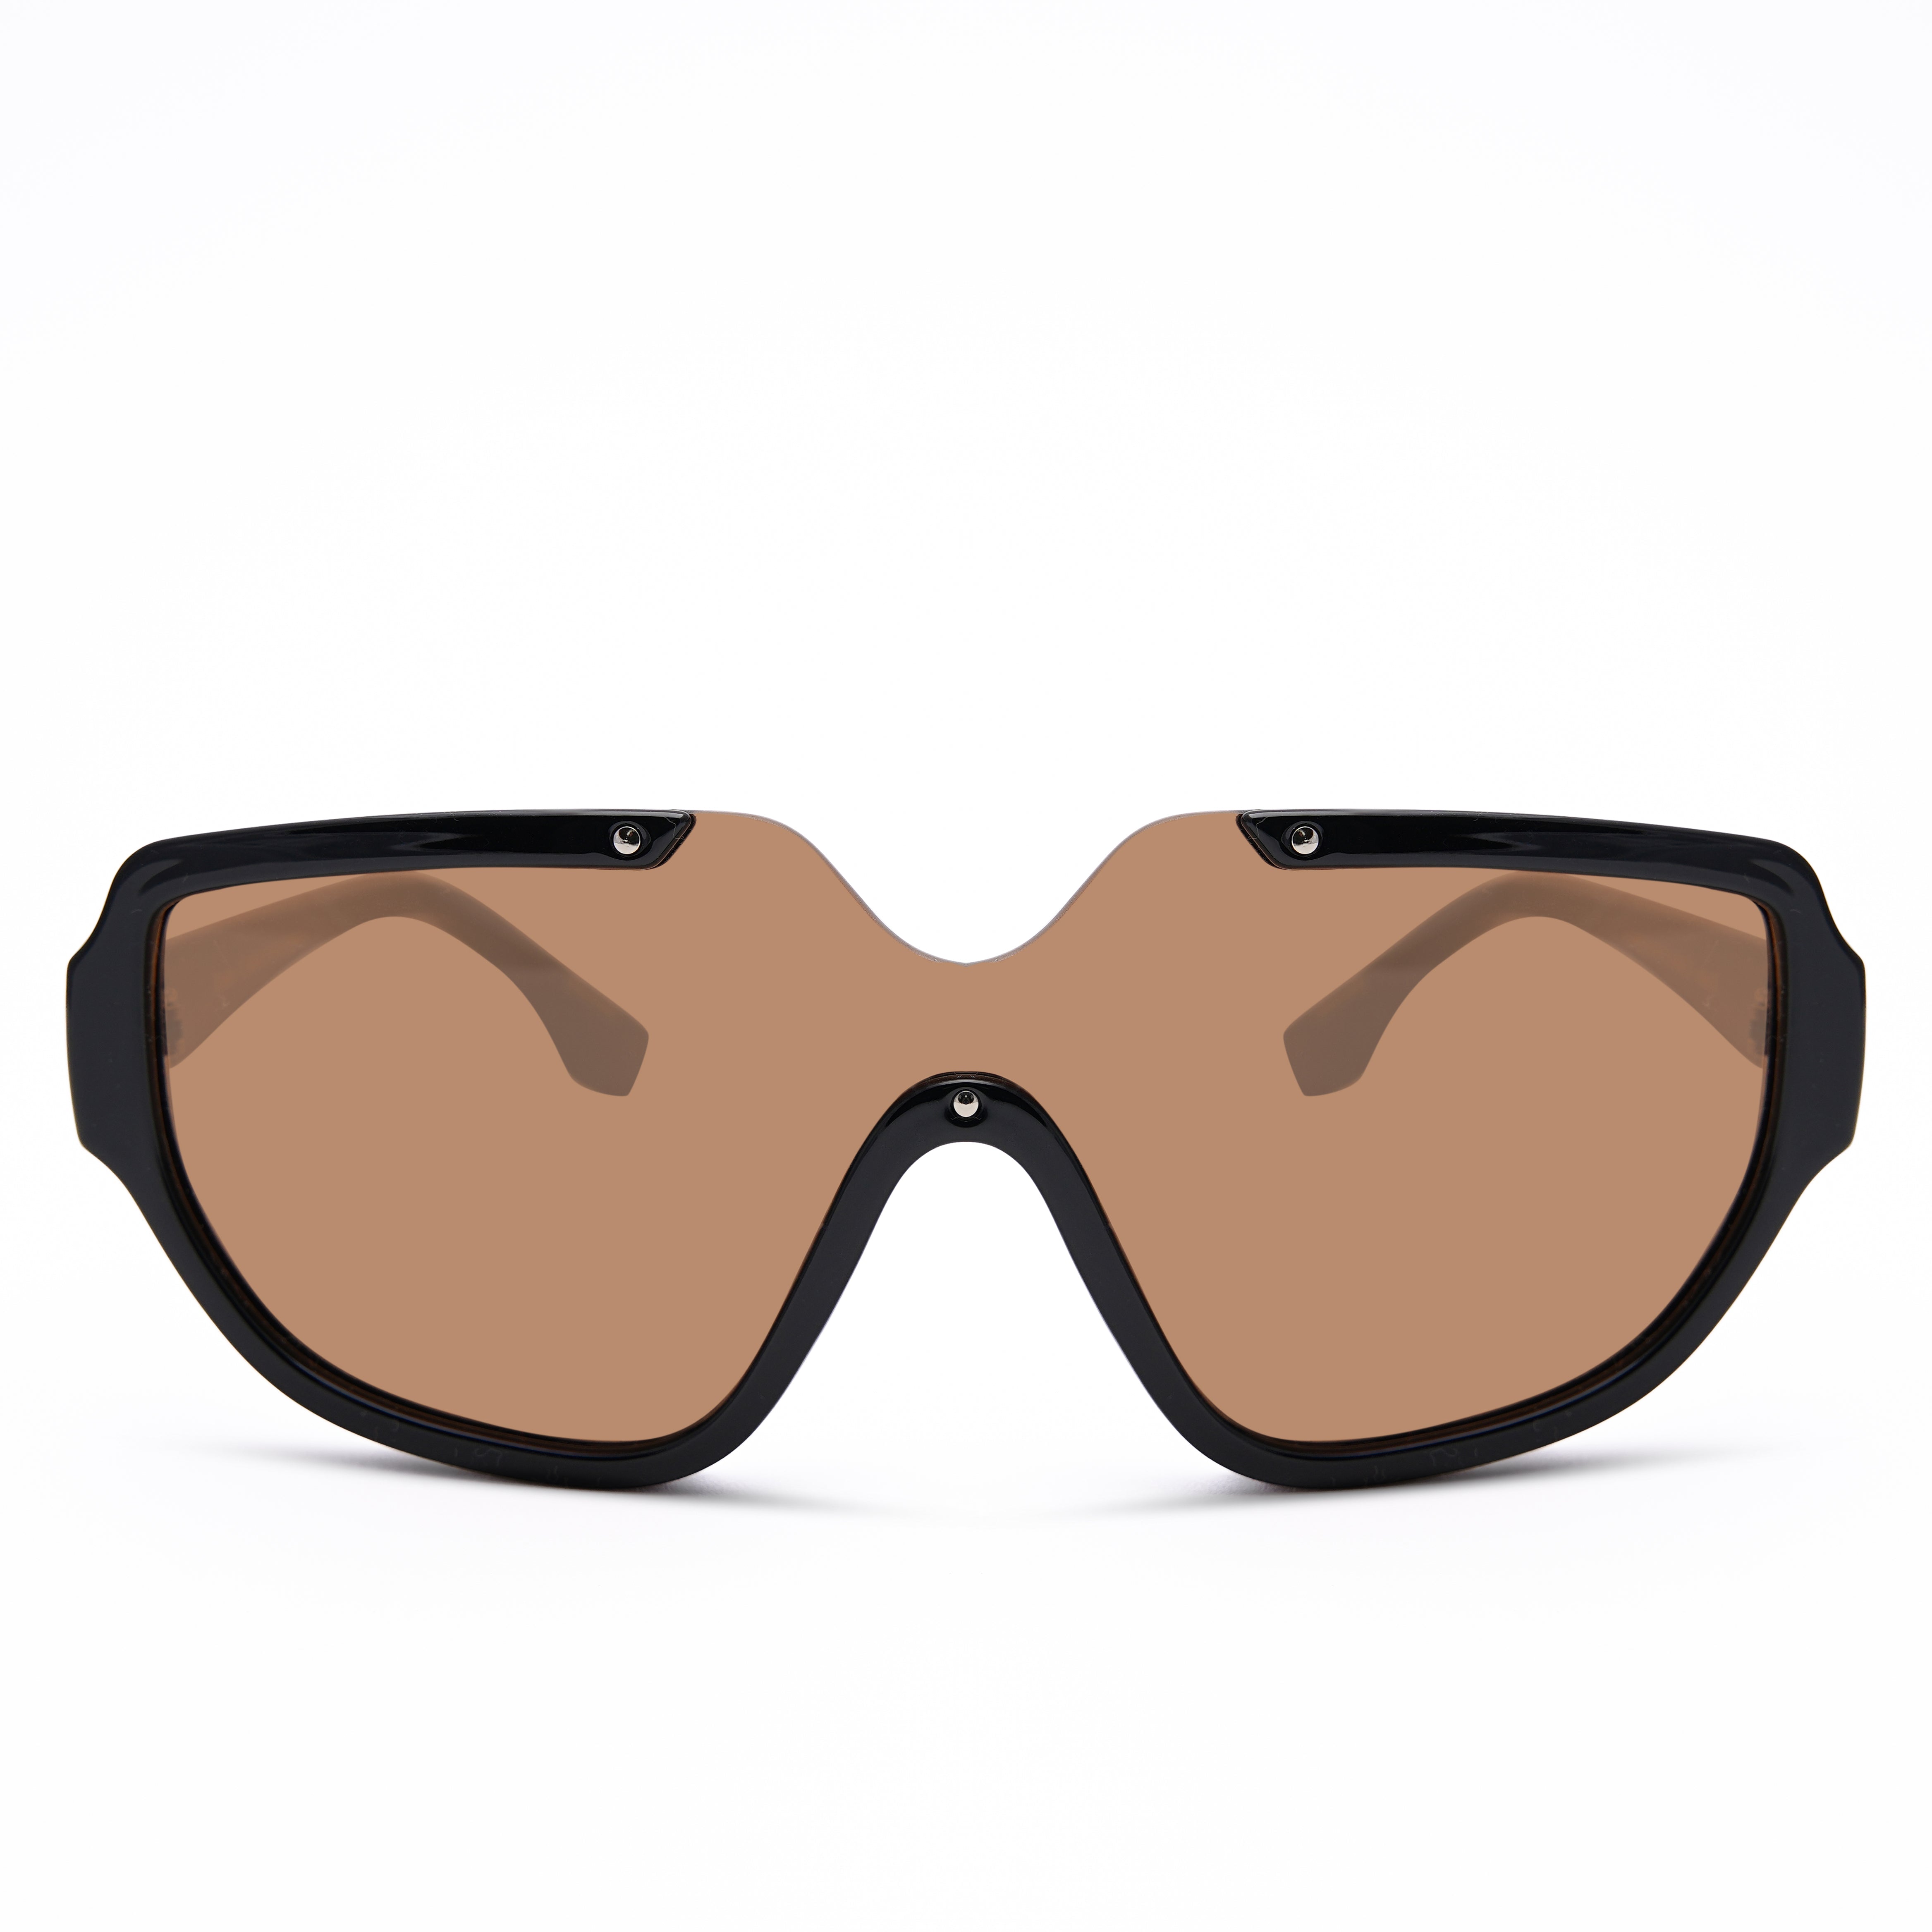 Jay-Z Sunglasses – Saint Oculus